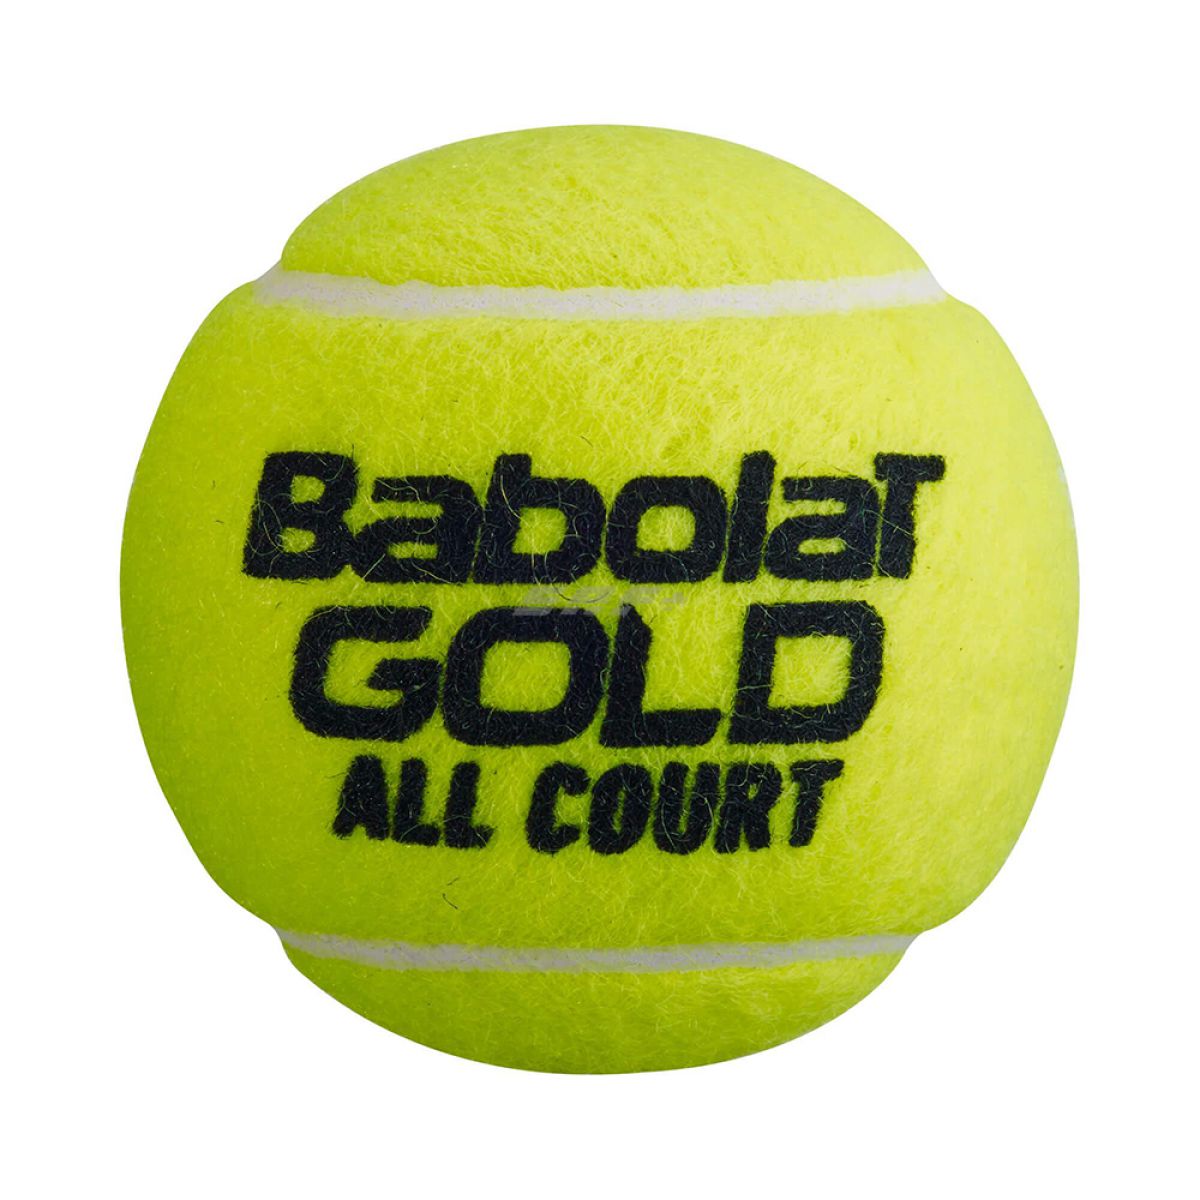 Мяч теннисный BABOLAT Gold All Court 3B,арт.501086, уп.3шт,одобр.ITF,сукно,нат.резина,желт